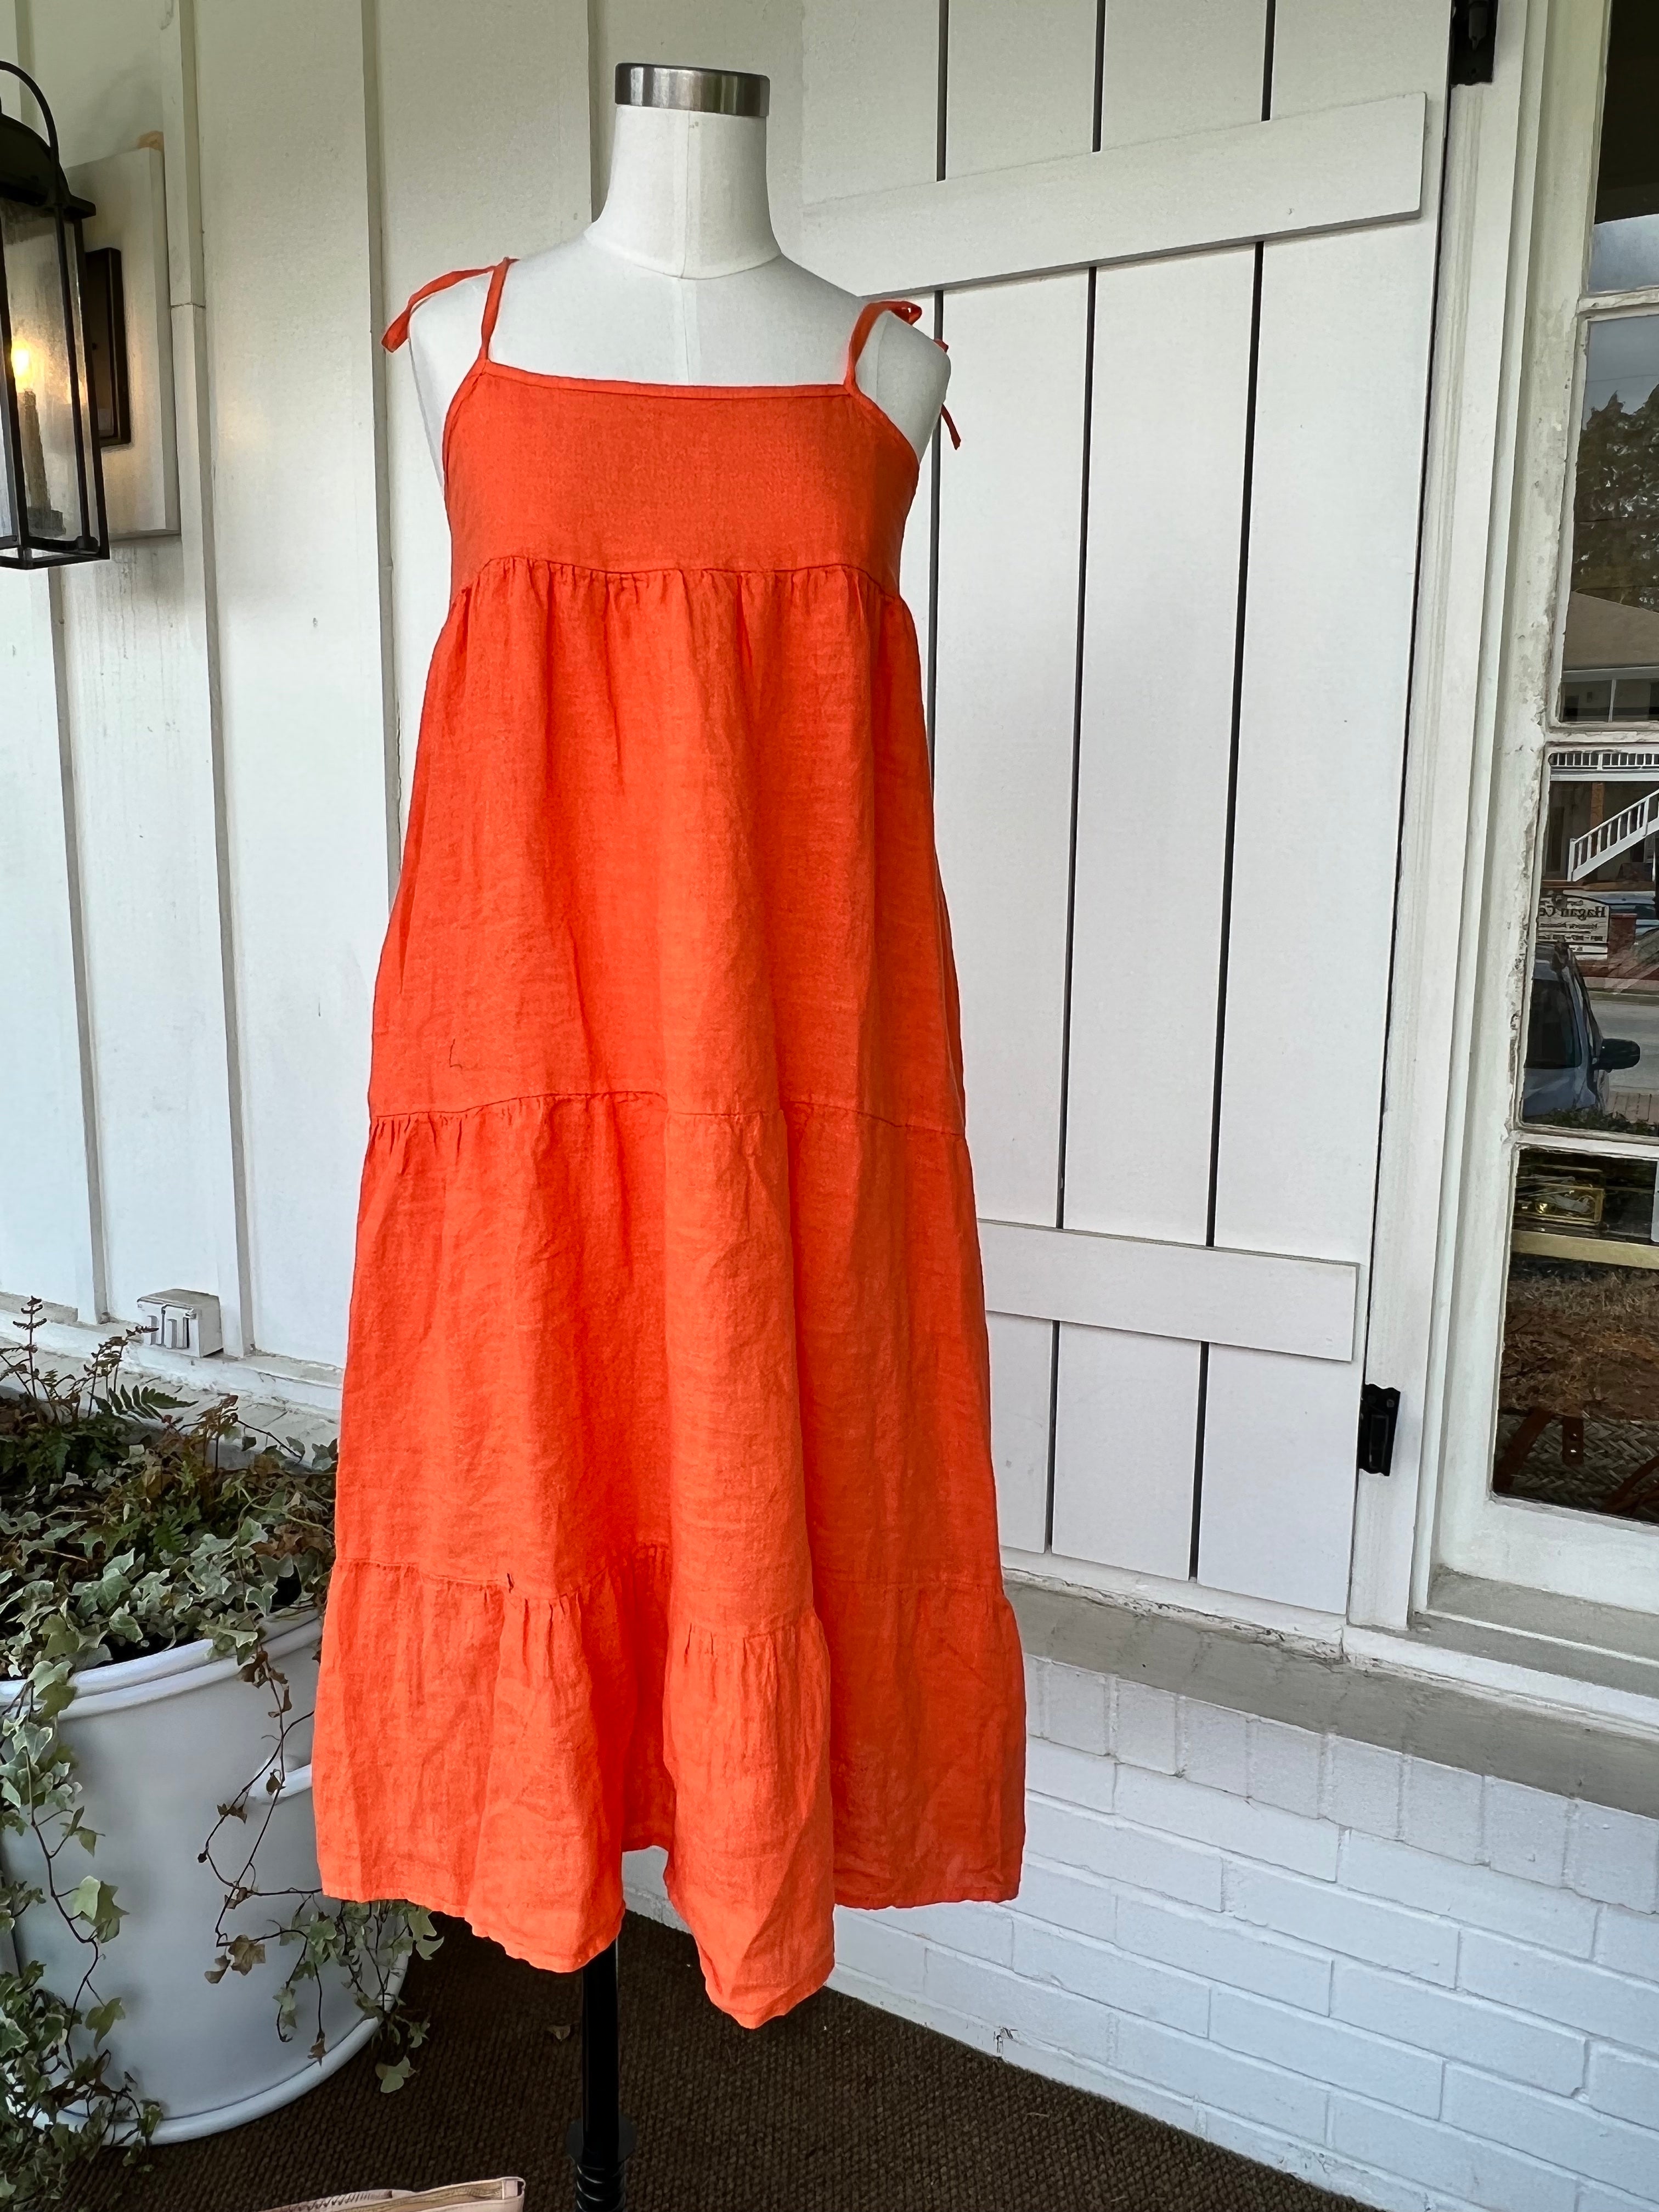 Orange Babydoll Dress